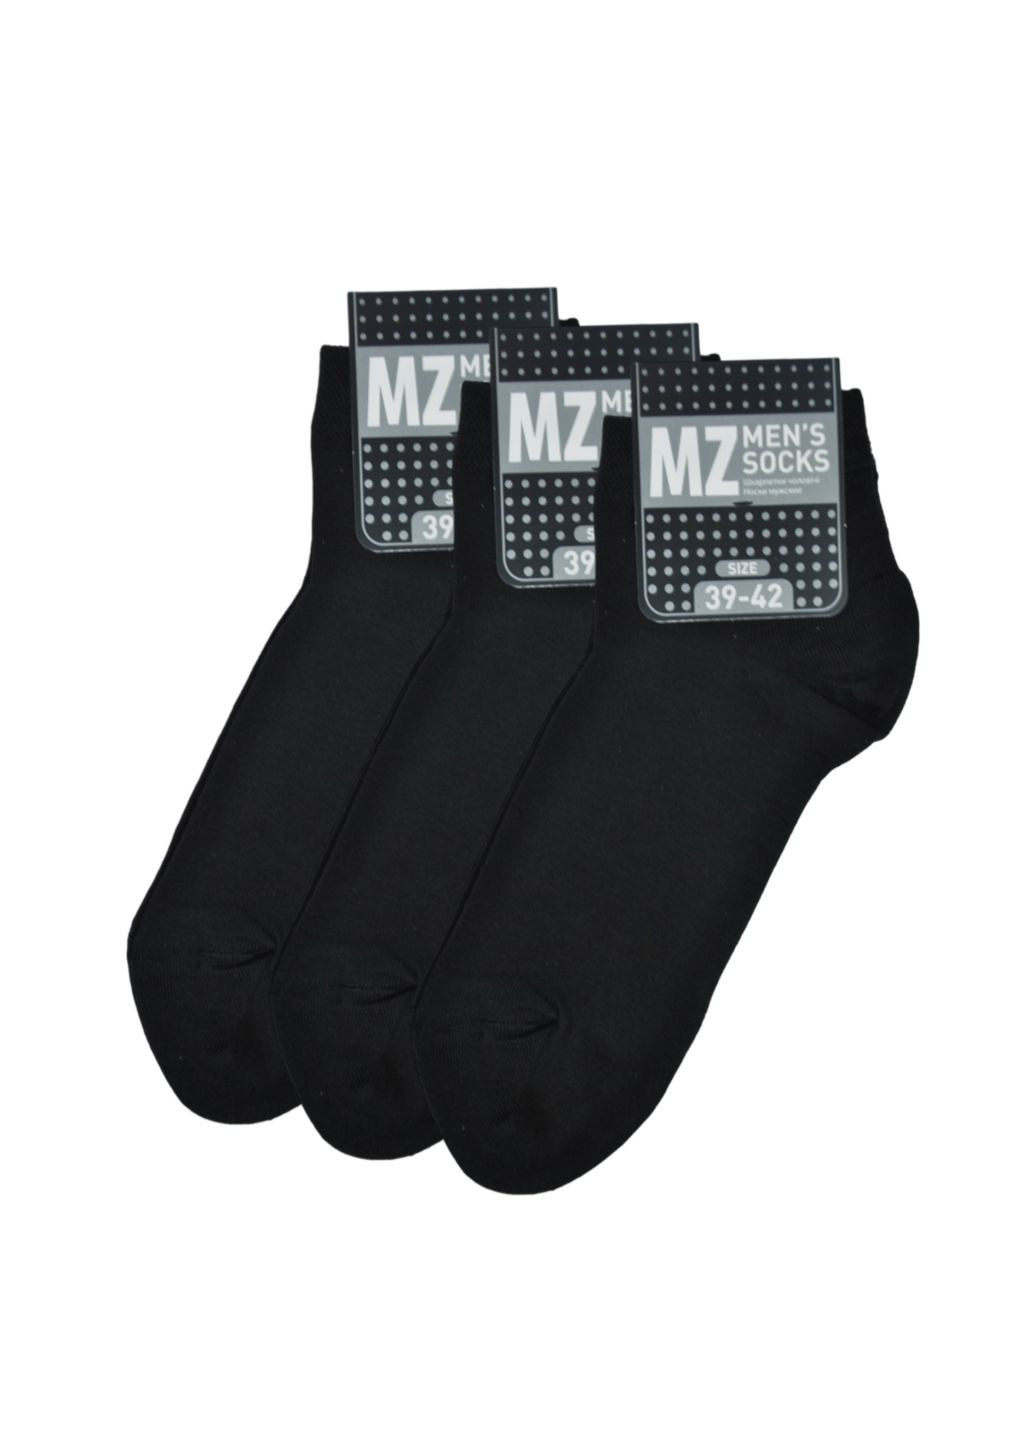 NTF Шкарпетки чол. (короткі) MS2C/Sl-cl, р.39-42, black. Набір (3 шт.) MZ ms2c_sl-cl (259038694)